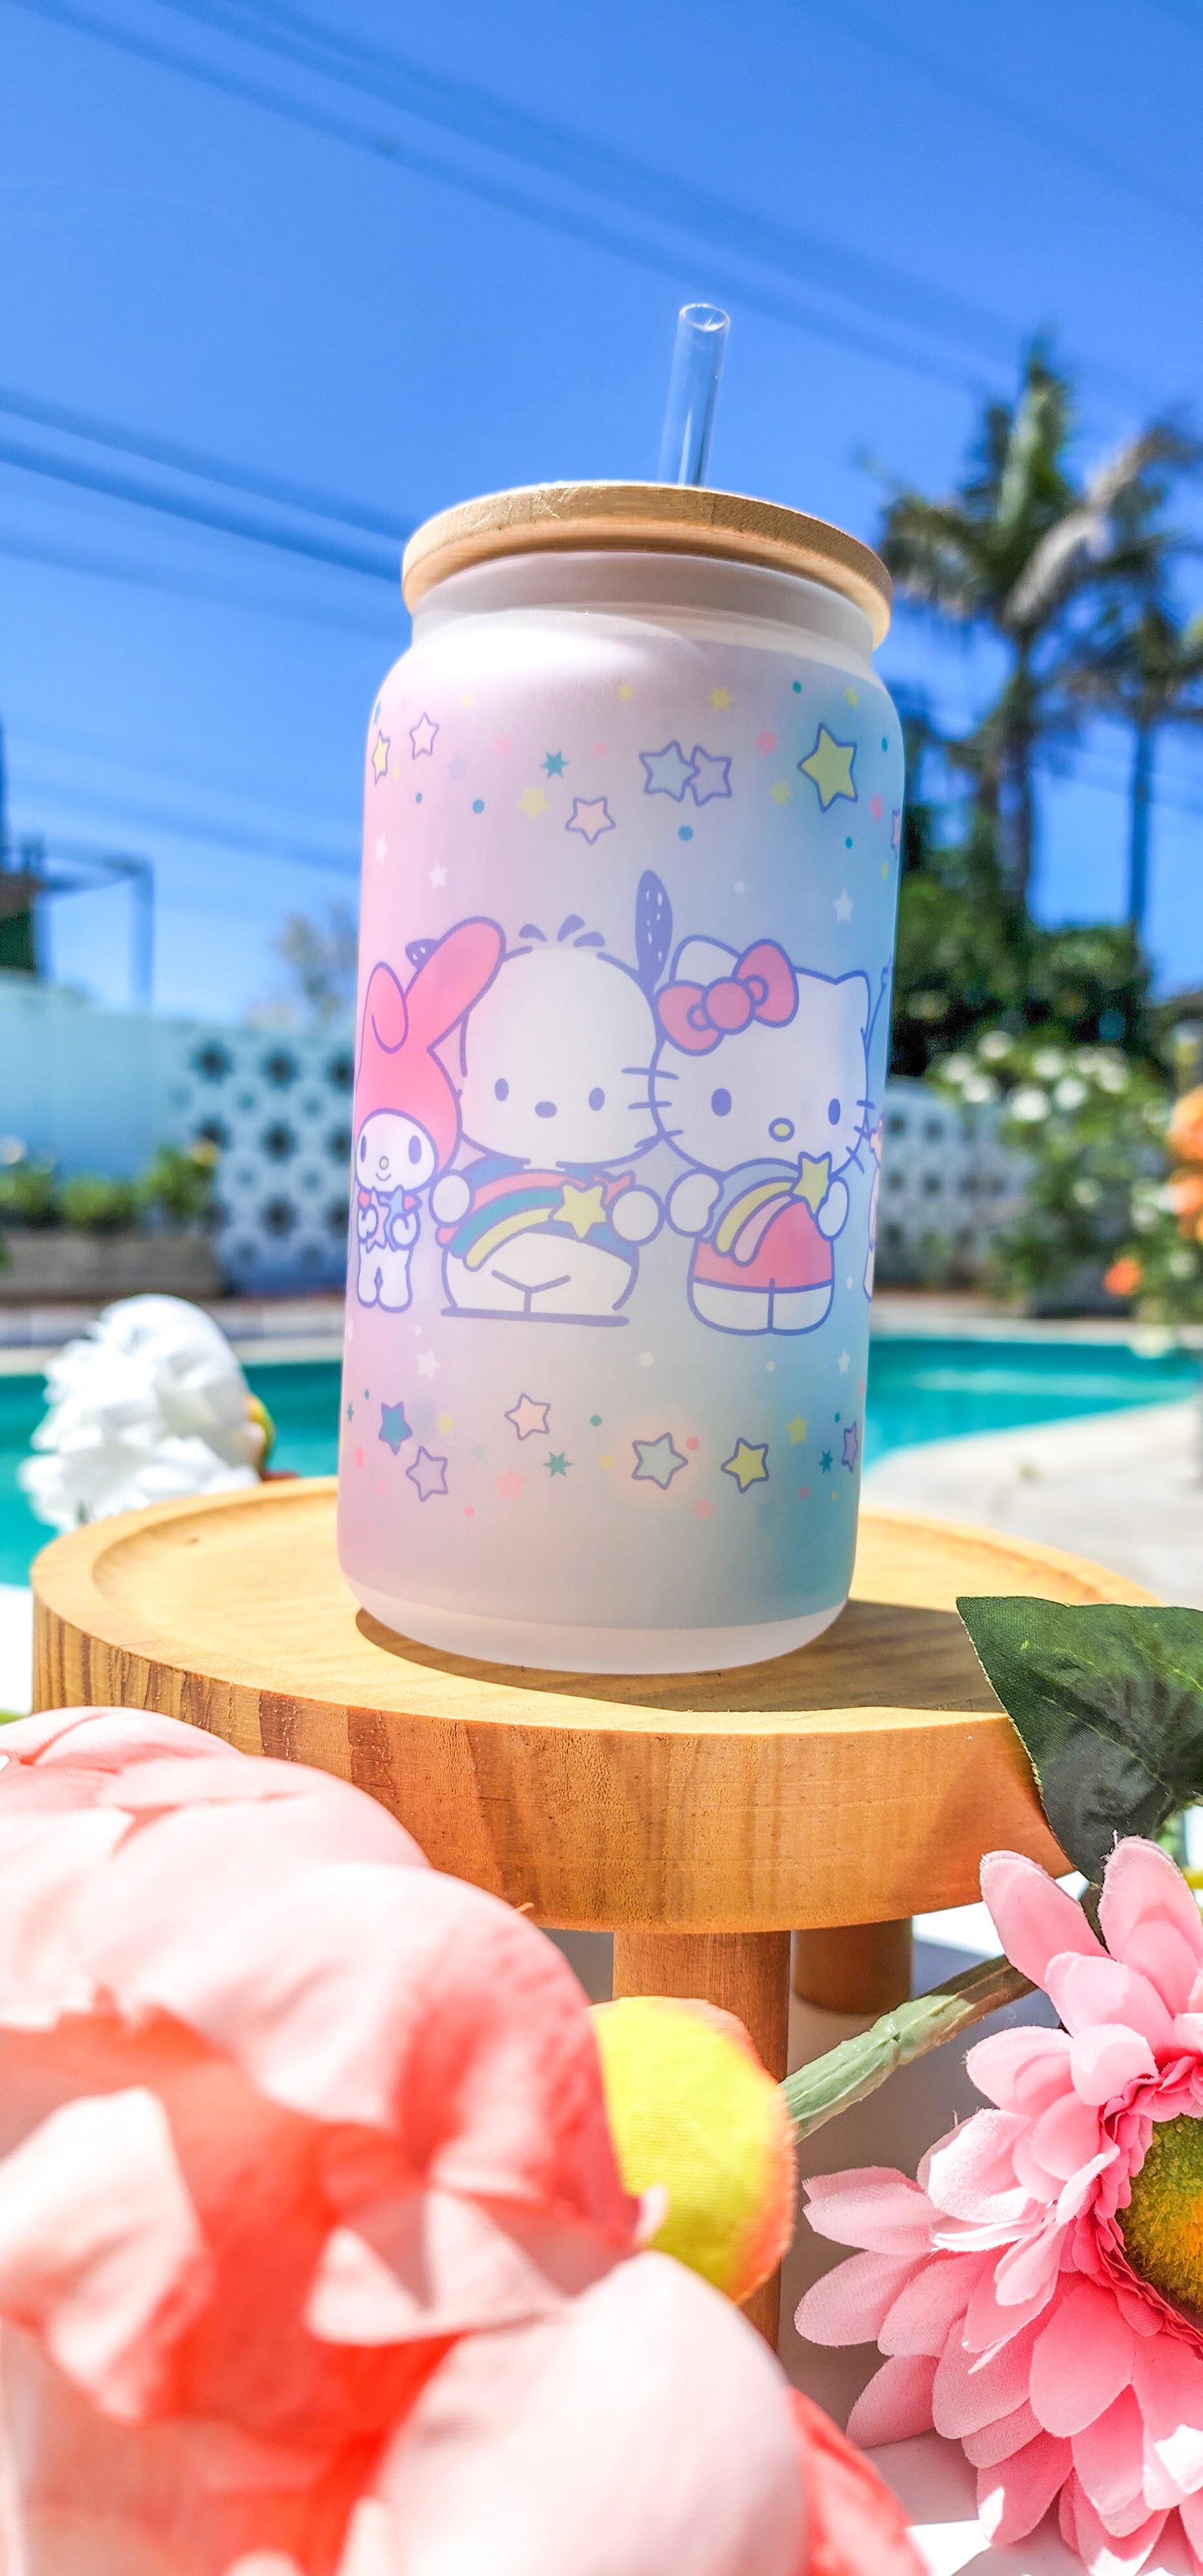 Hello Kitty Delight: 16oz Glass Tumbler - Adorable and Playful Design